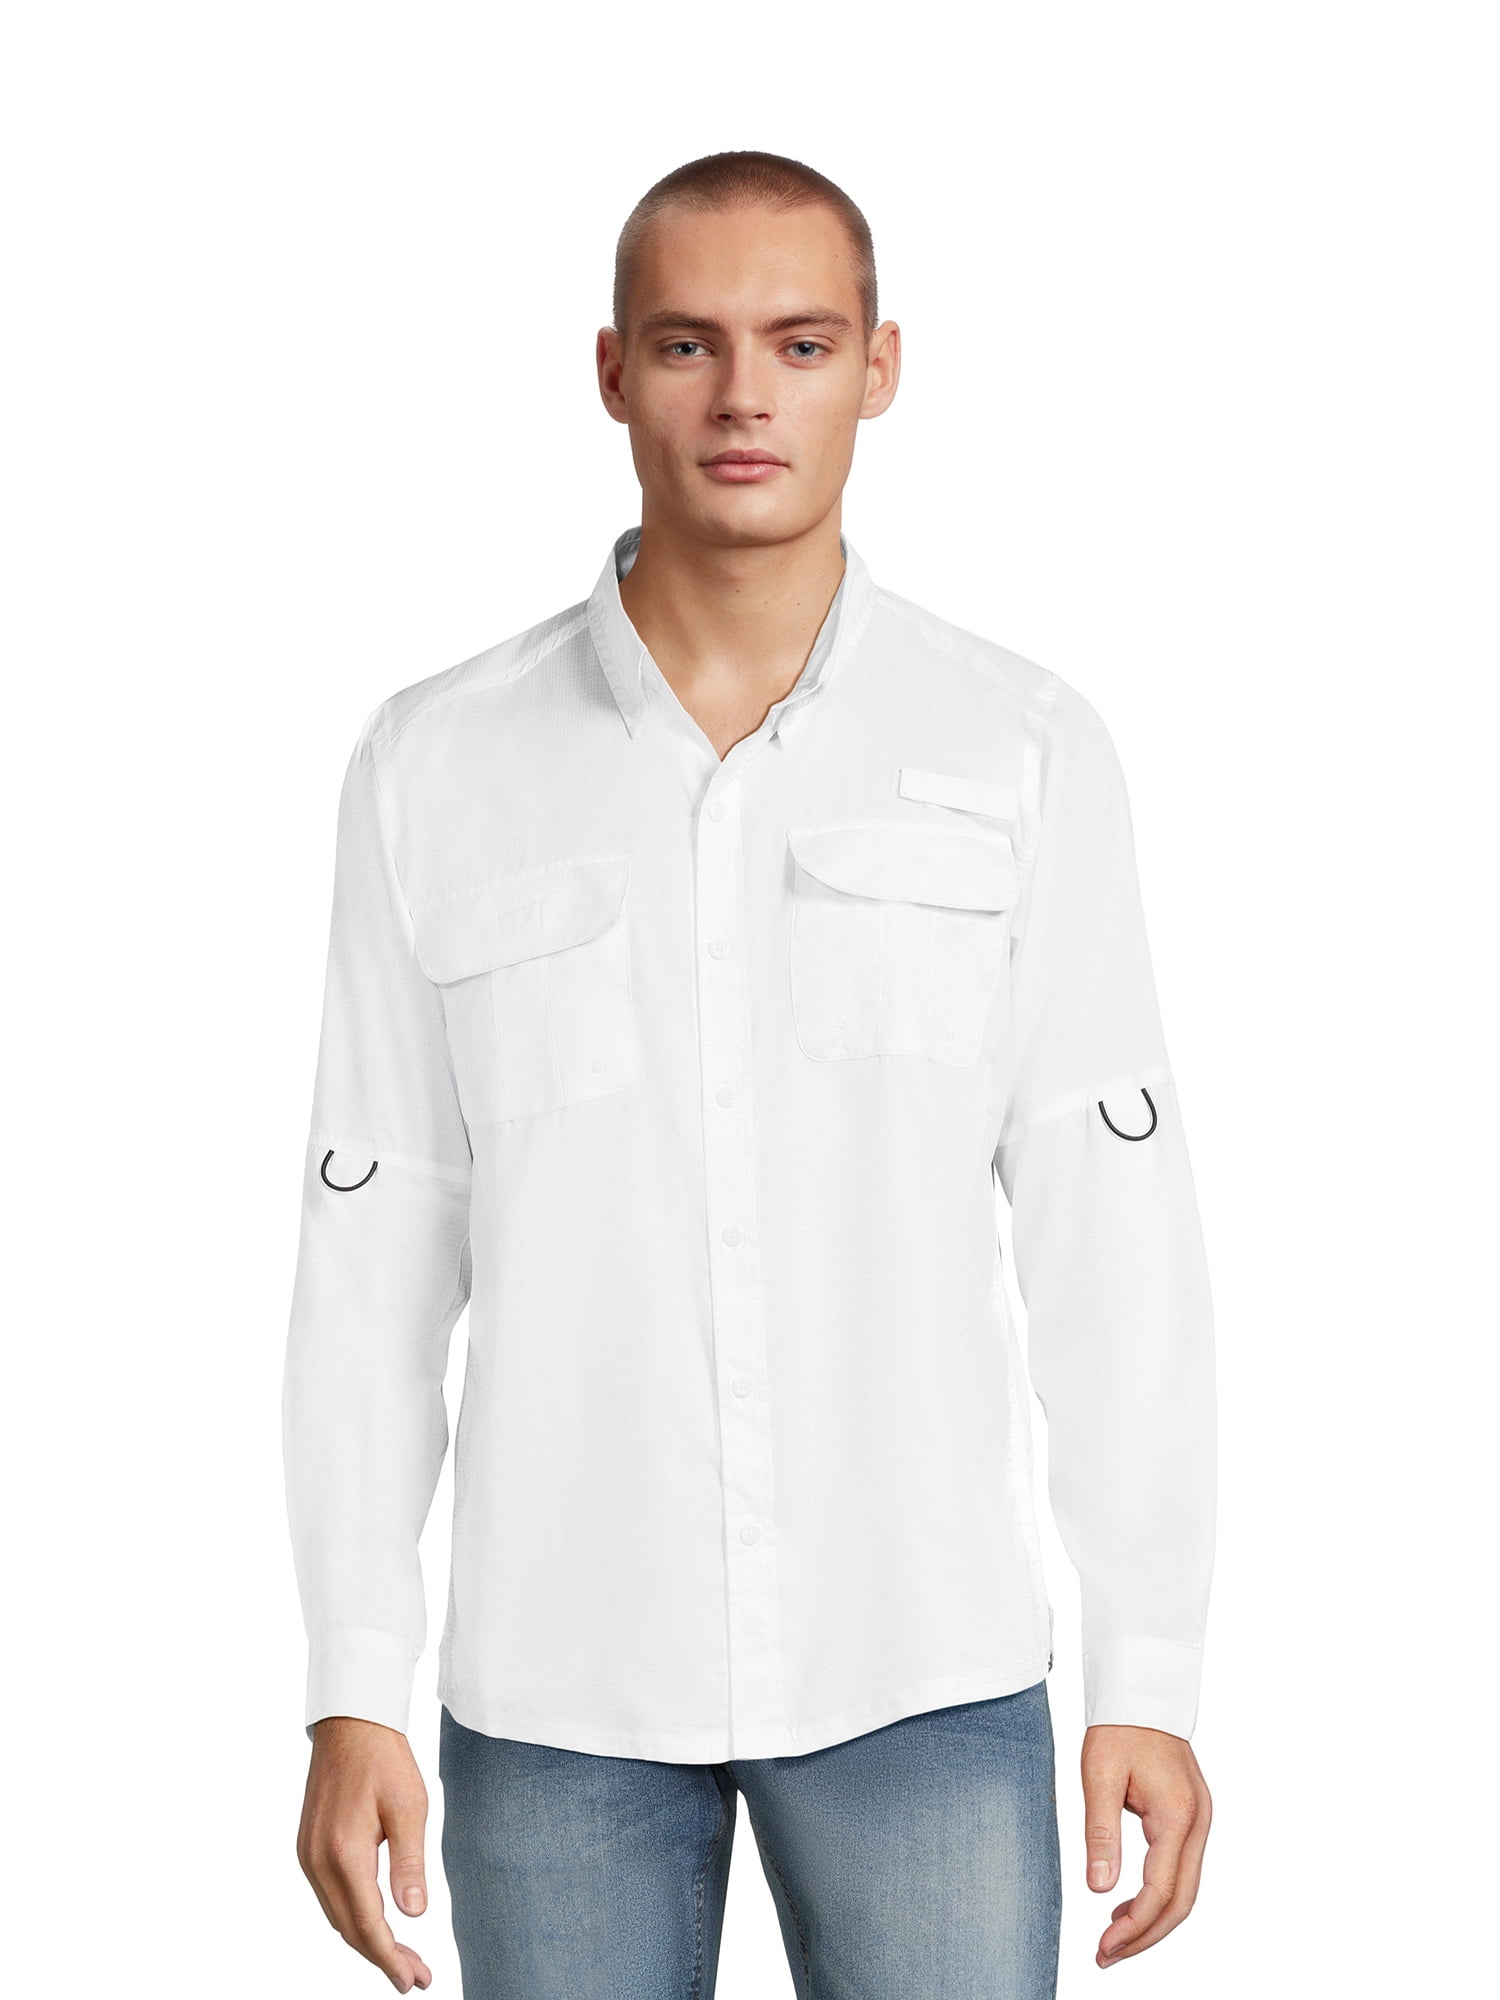 Burnside Men's Long Sleeve Utility Fishing Shirt, Sizes M-2xl, White